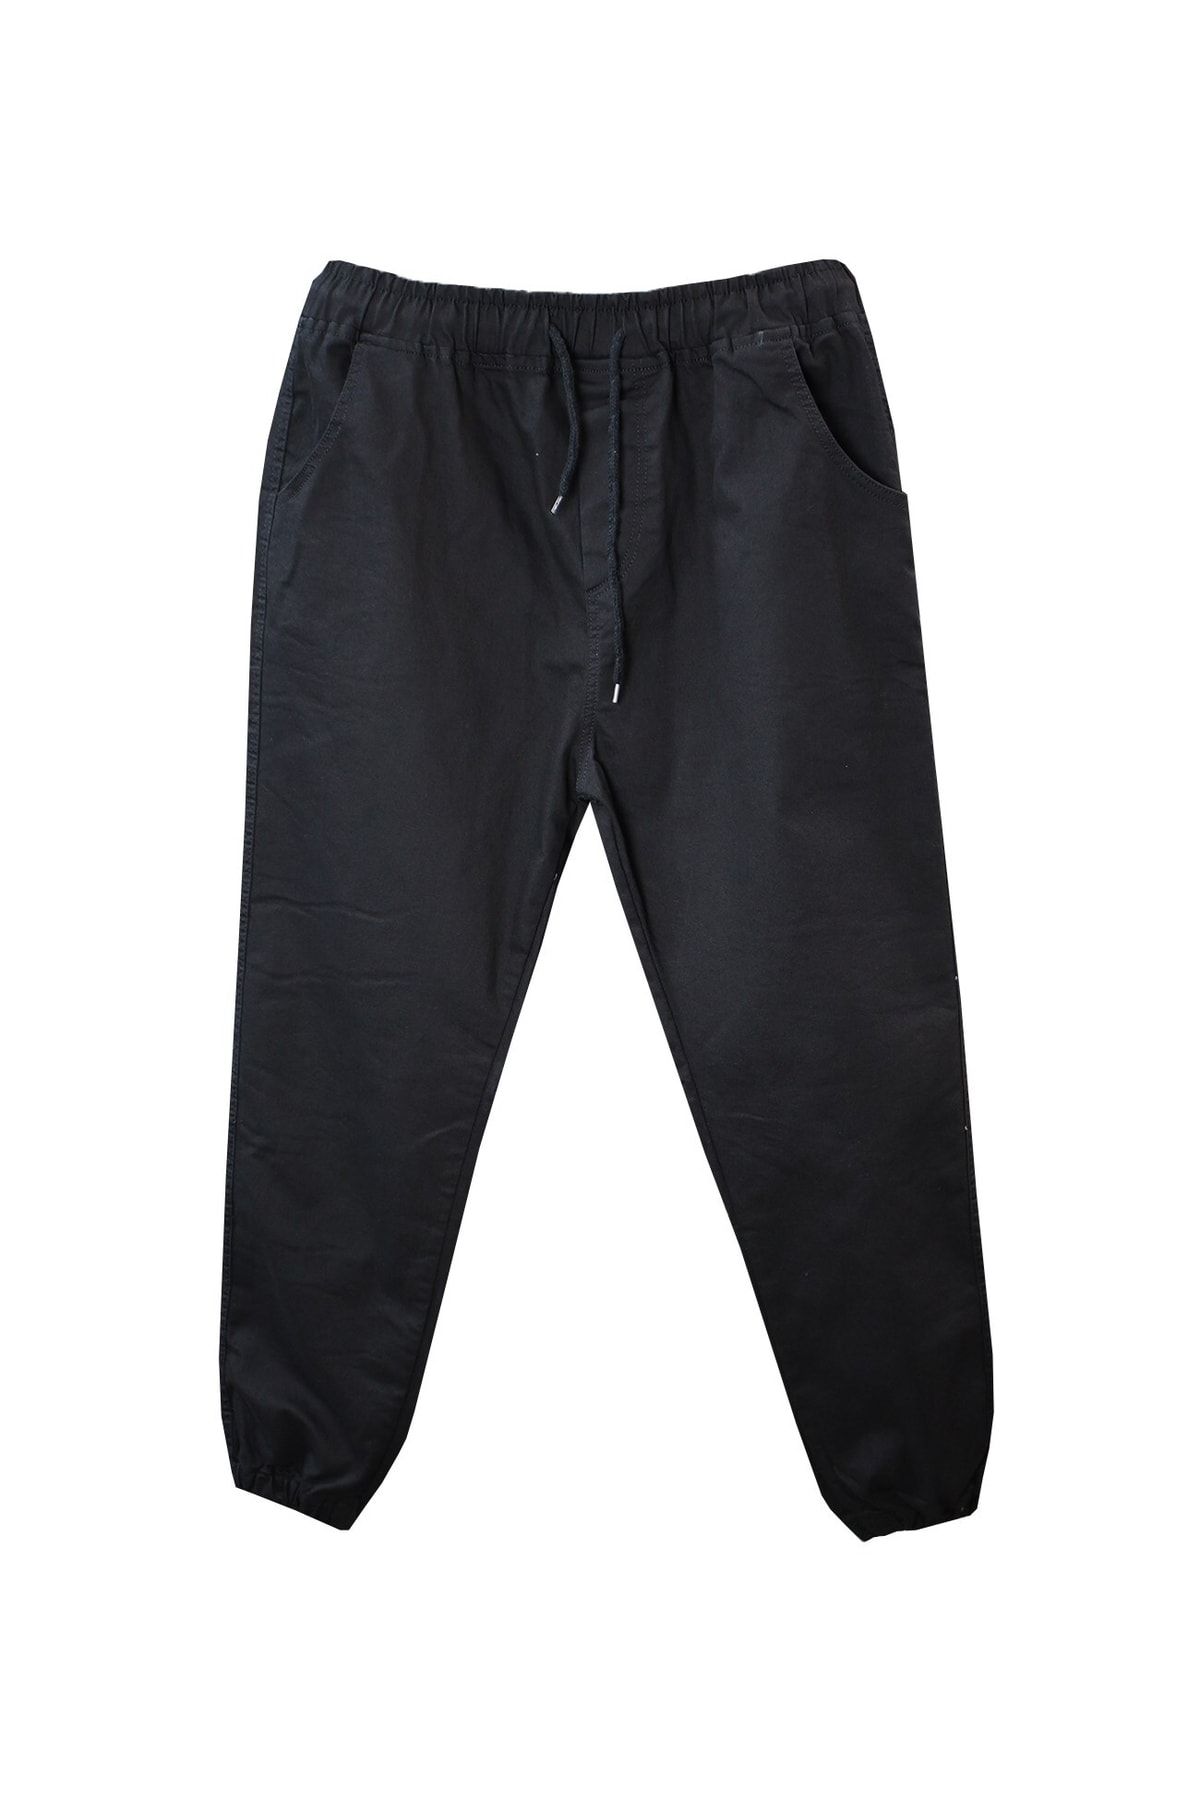 marufshop Plus Size Pants - Black - Cargo - Trendyol